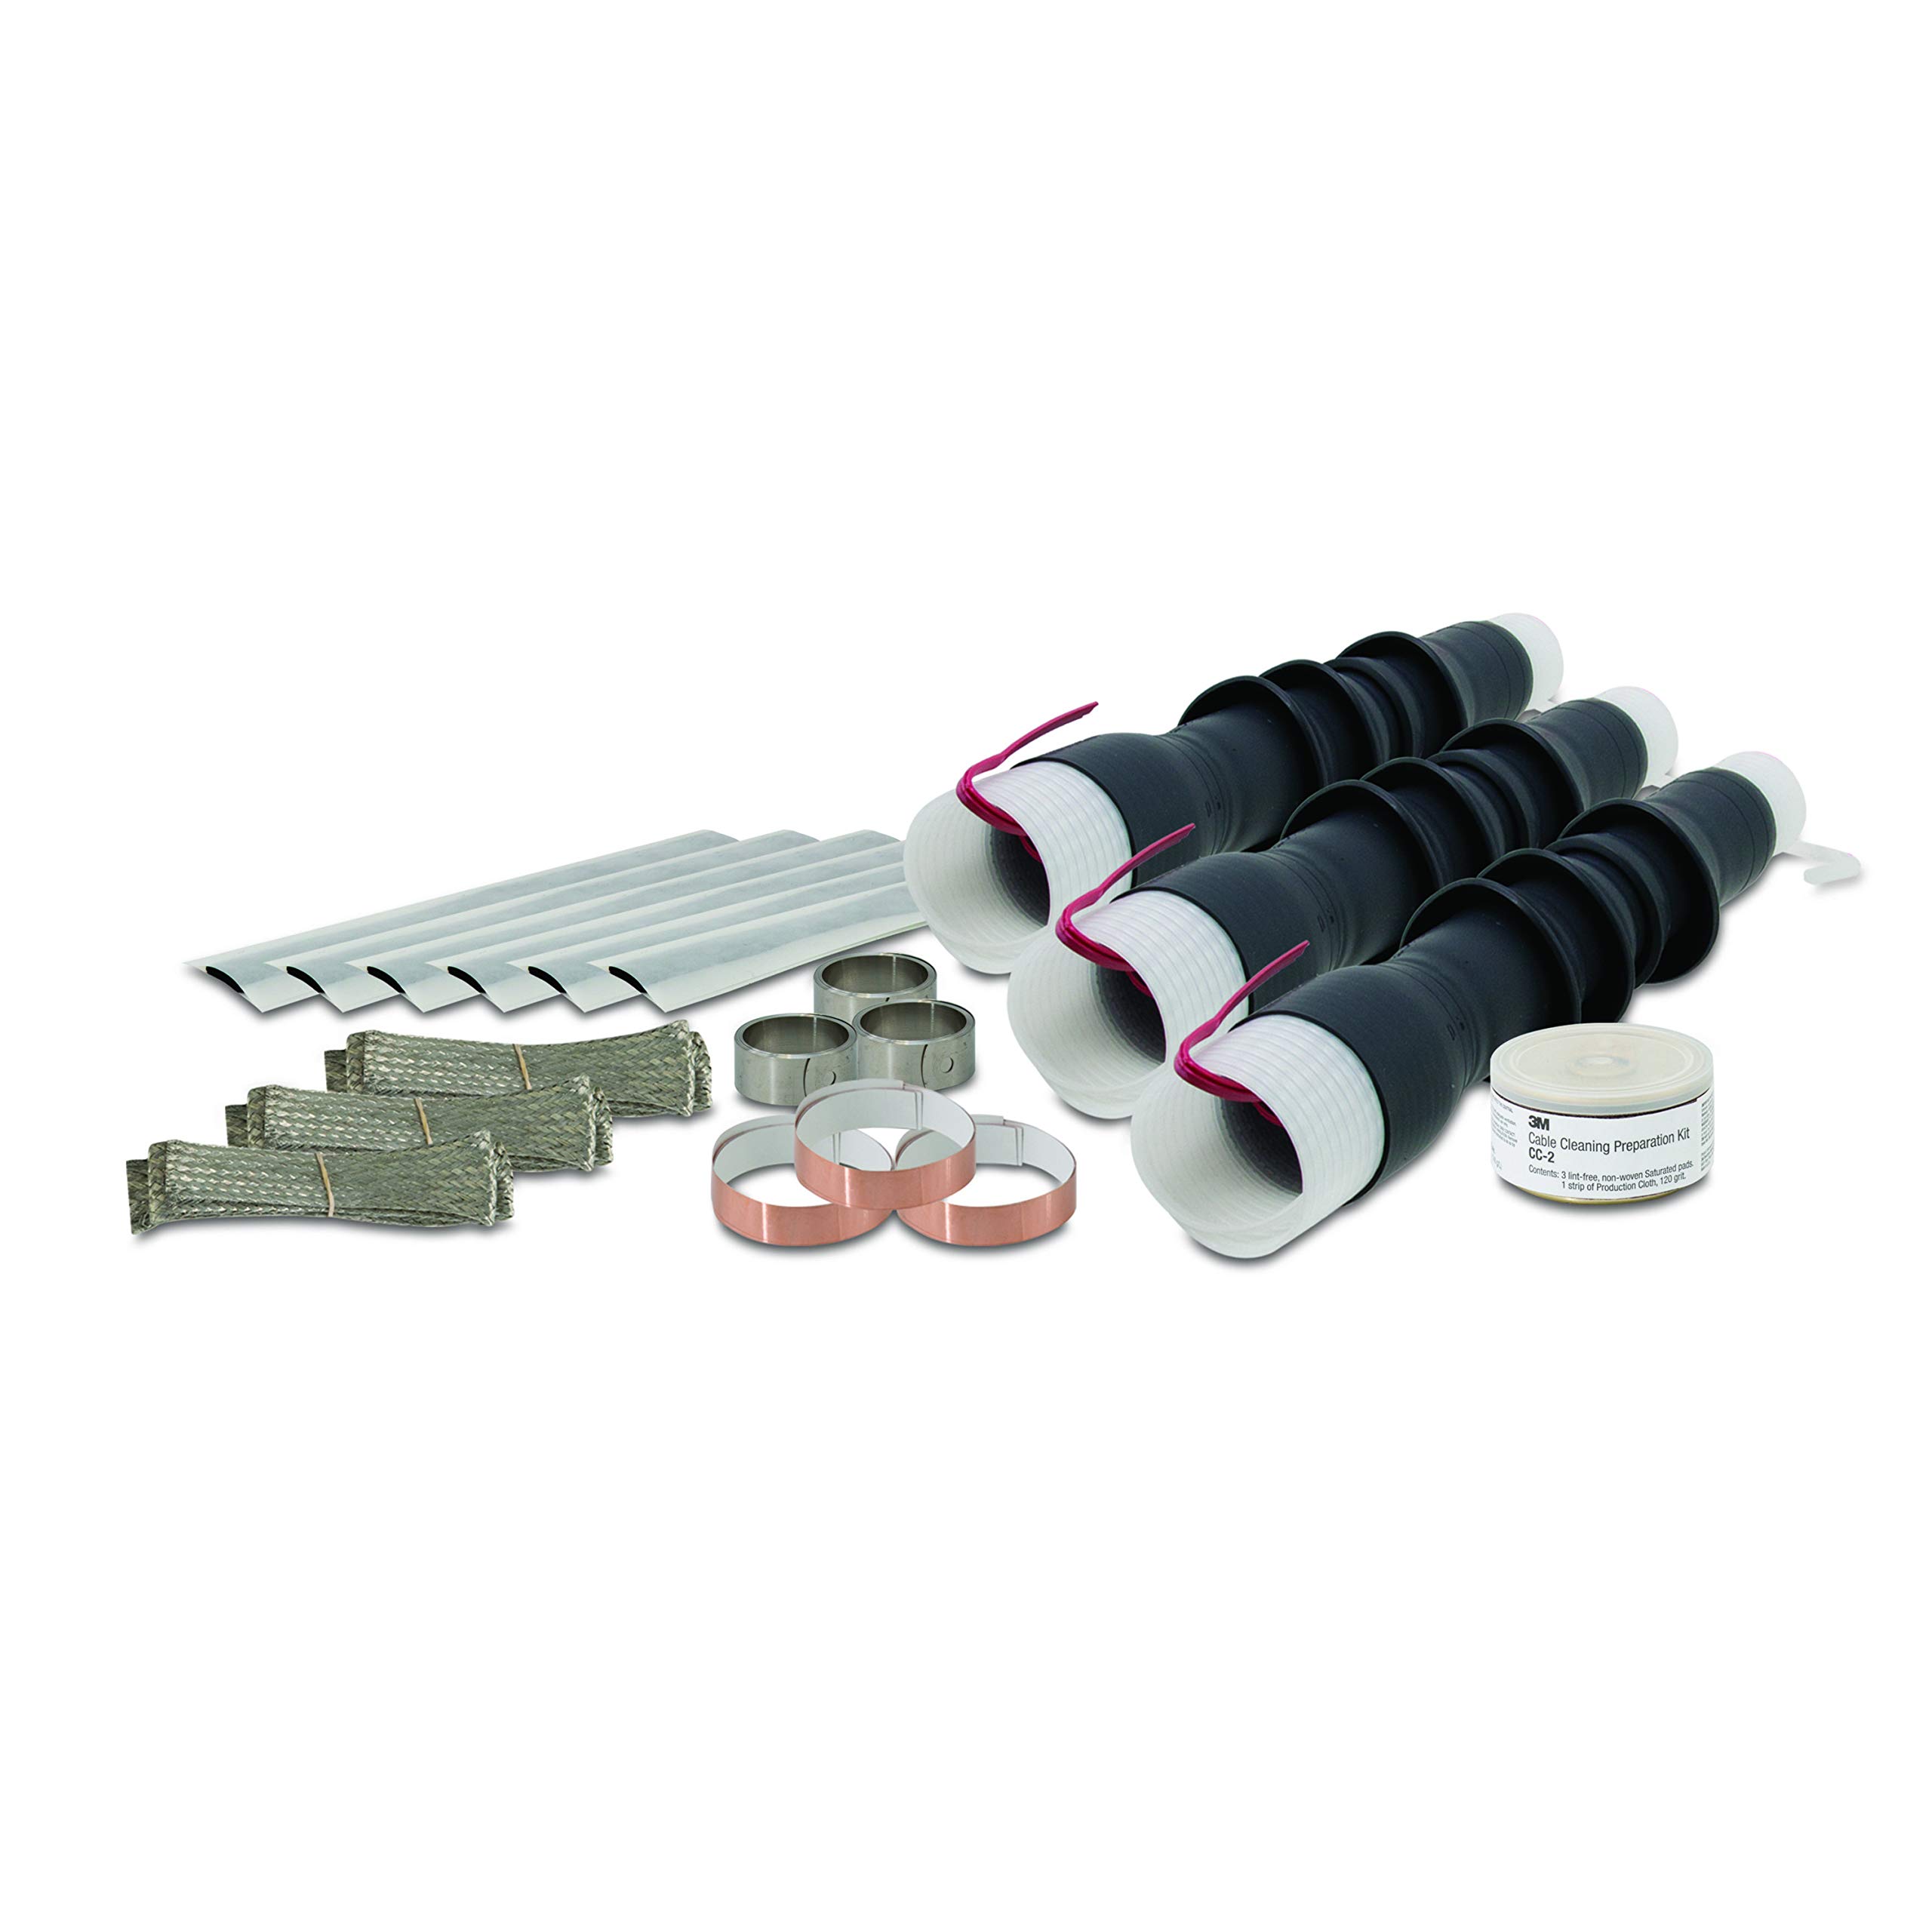 Cold Shrink QT-III 3/C Termination Kit 7620-T-95-3G, Tape/Wire/UniShield®, 5-8.7 kV, Insulation OD 0.33-0.50 in, 3/kit